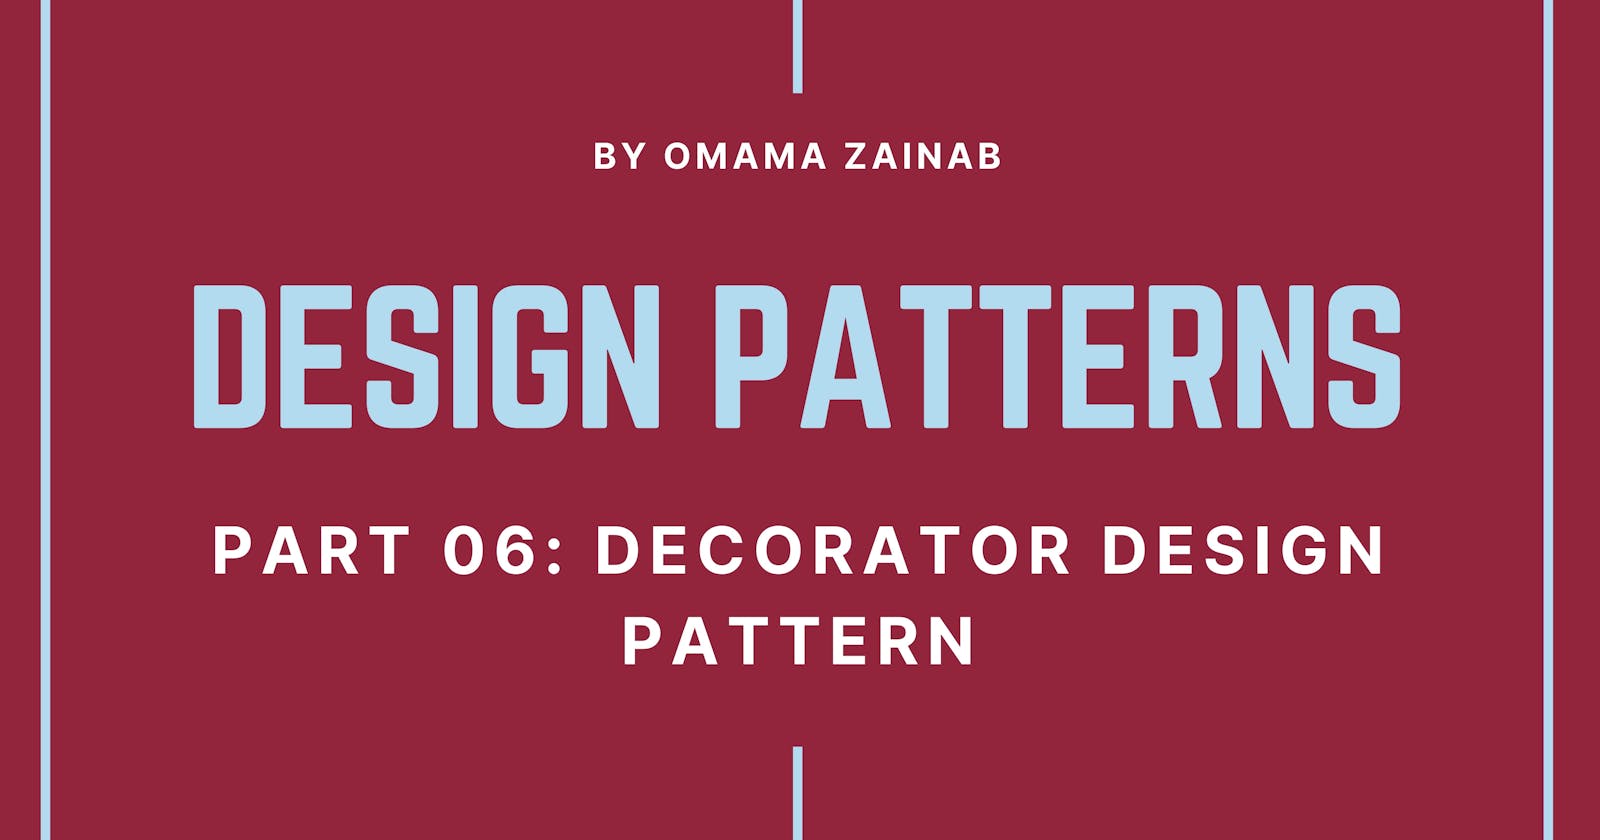 Part 06: Decorator Design Pattern